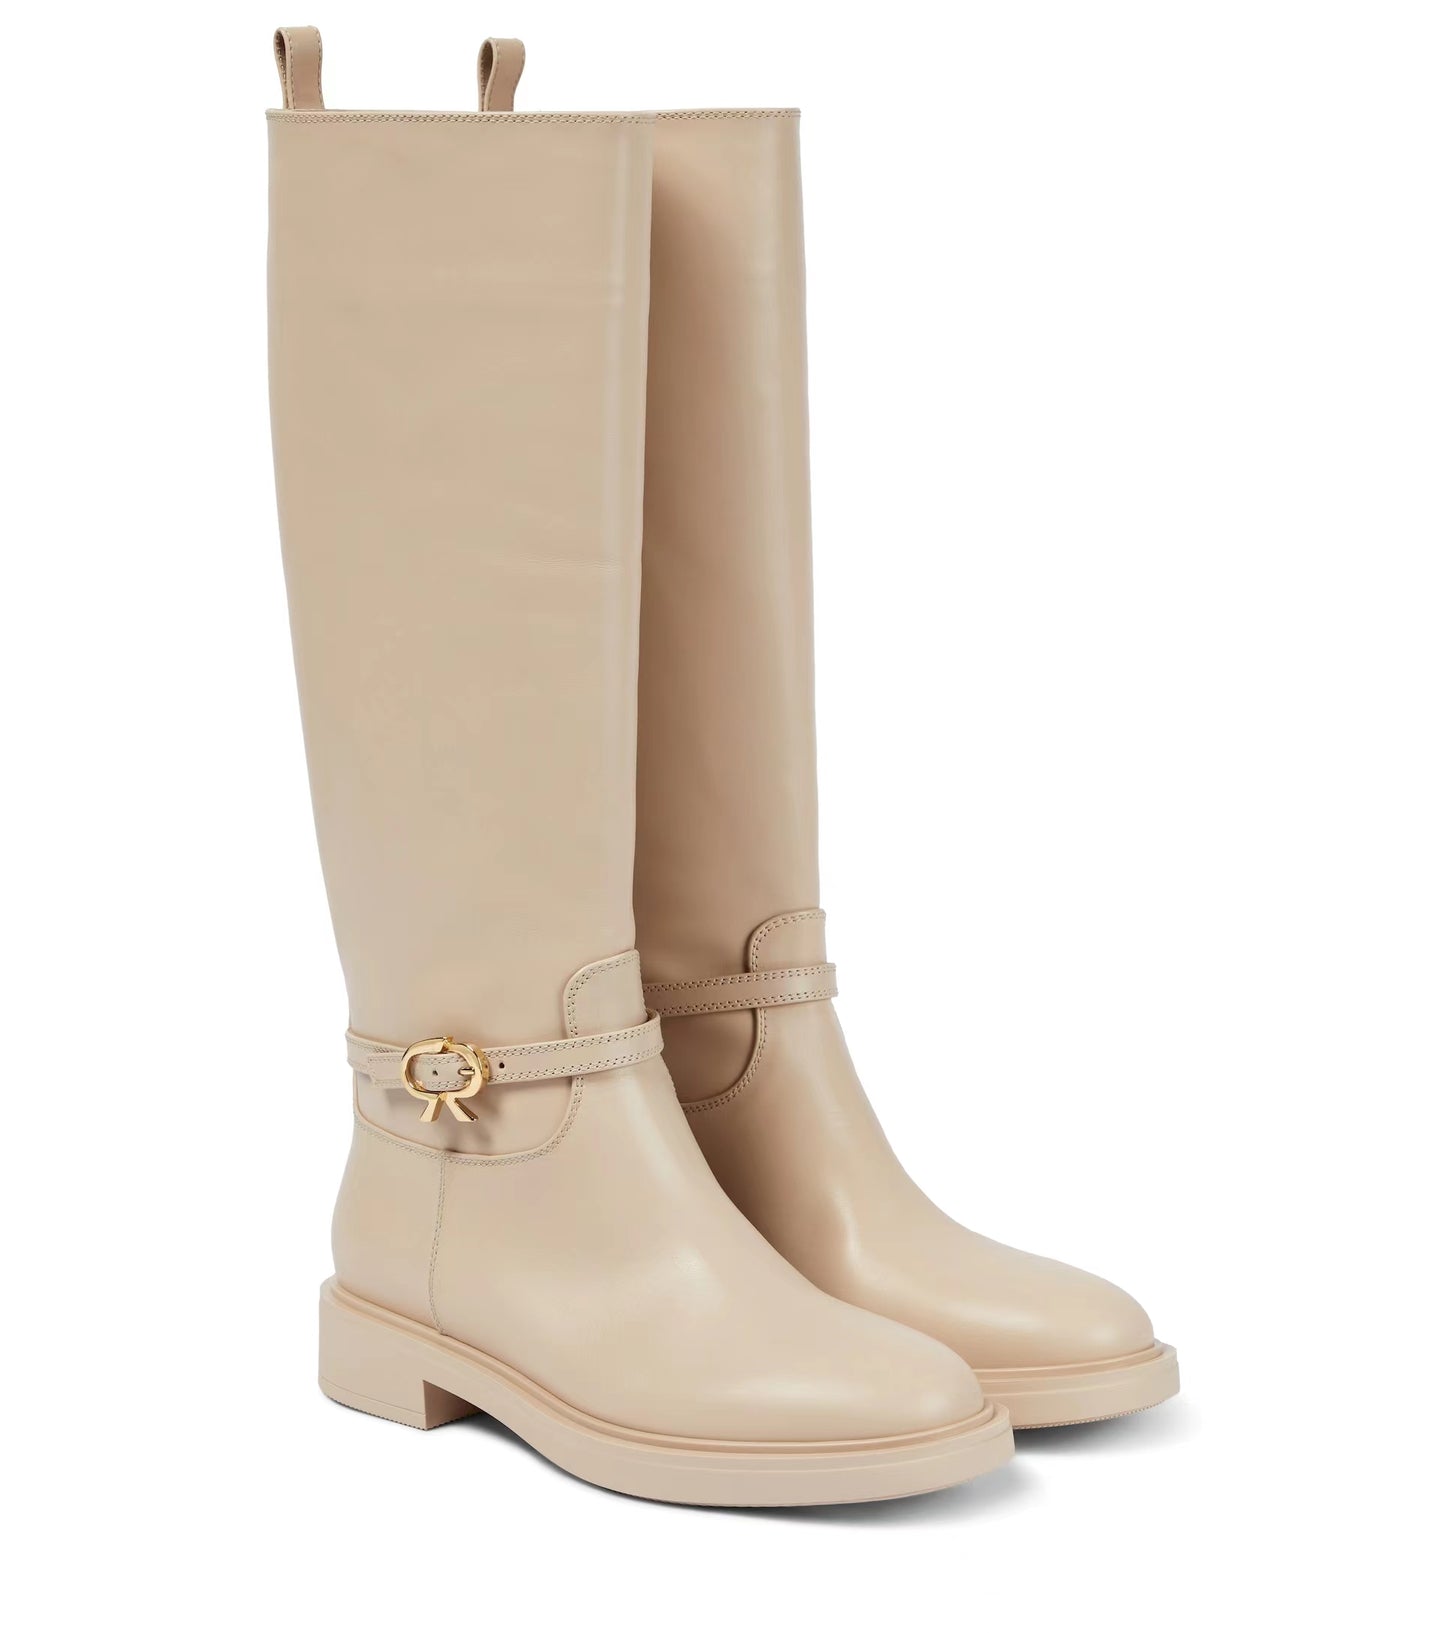 TinaCus Women's Genuine Leather Round Toe Handmade Side Zipper Low Chunky Heels Trendy Knee High Boots